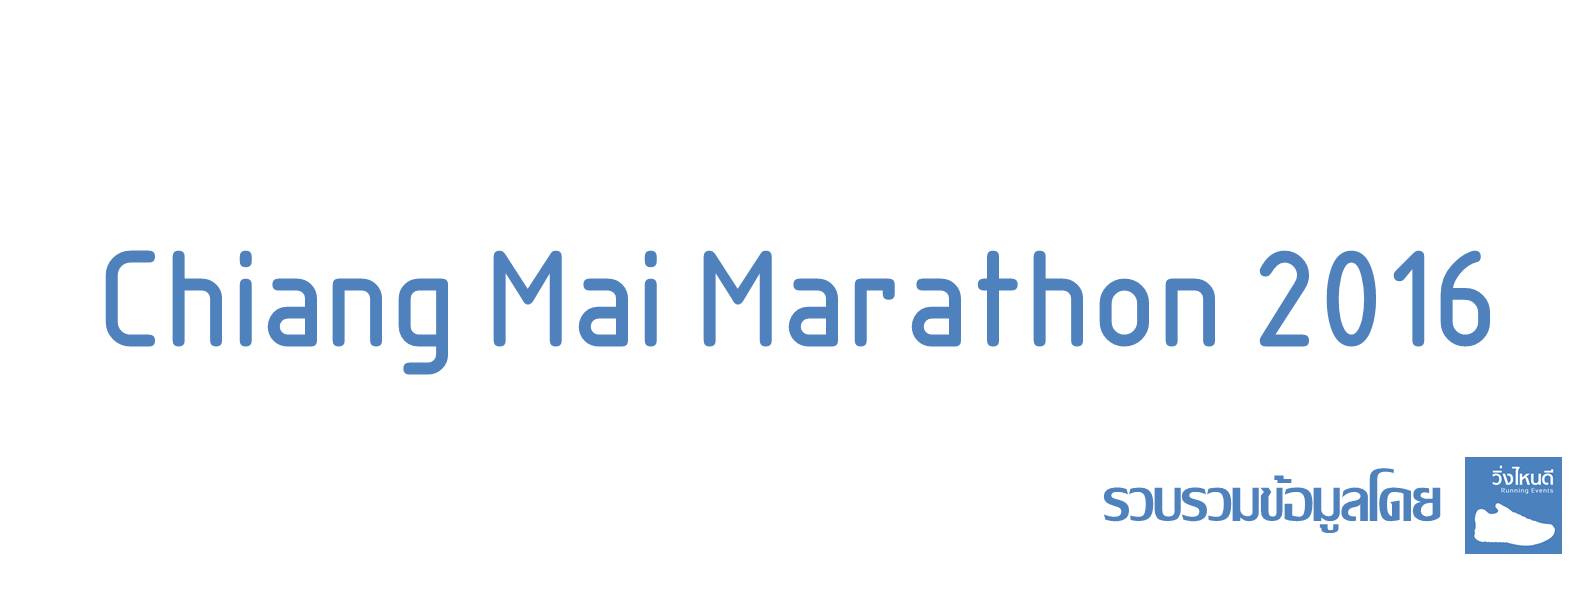 Chiang Mai Marathon 2016